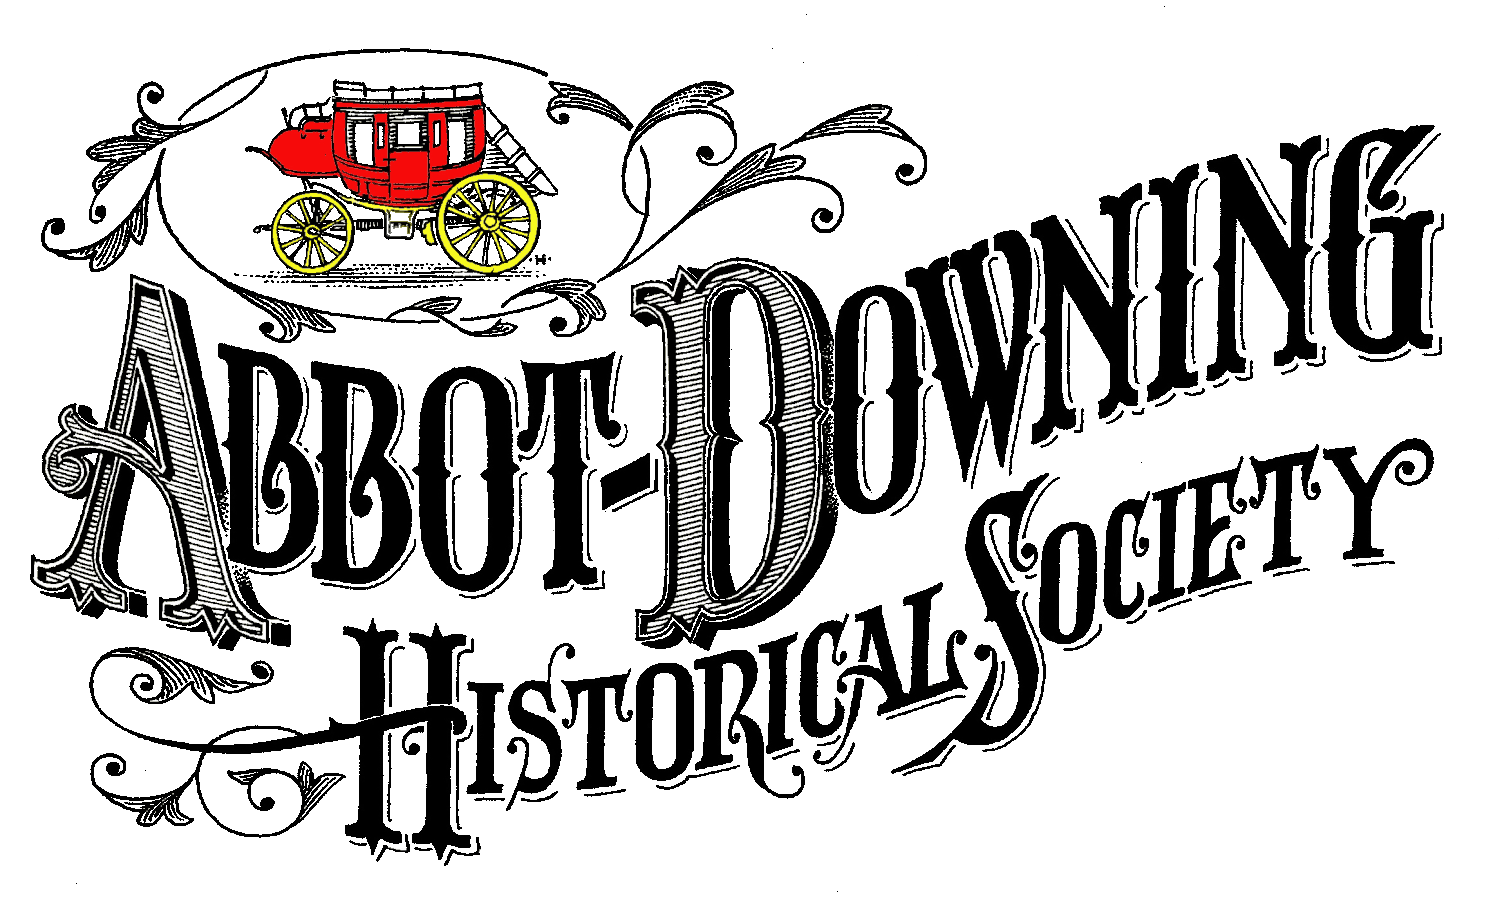 Abbot-Downing Historical Society